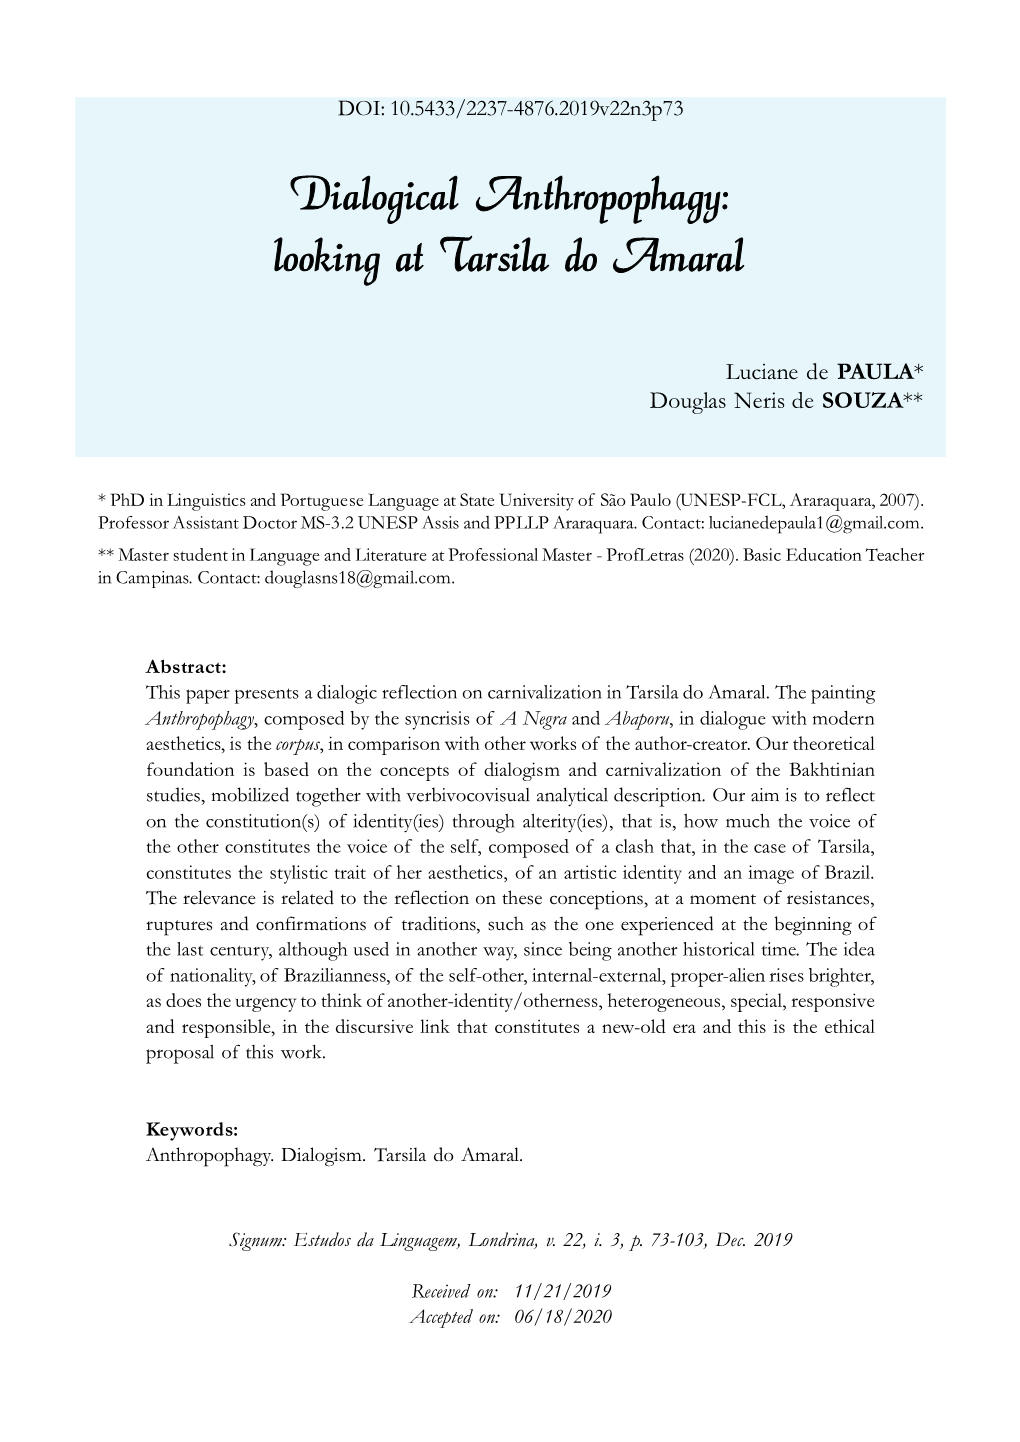 Dialogical Anthropophagy: Looking at Tarsila Do Amaral